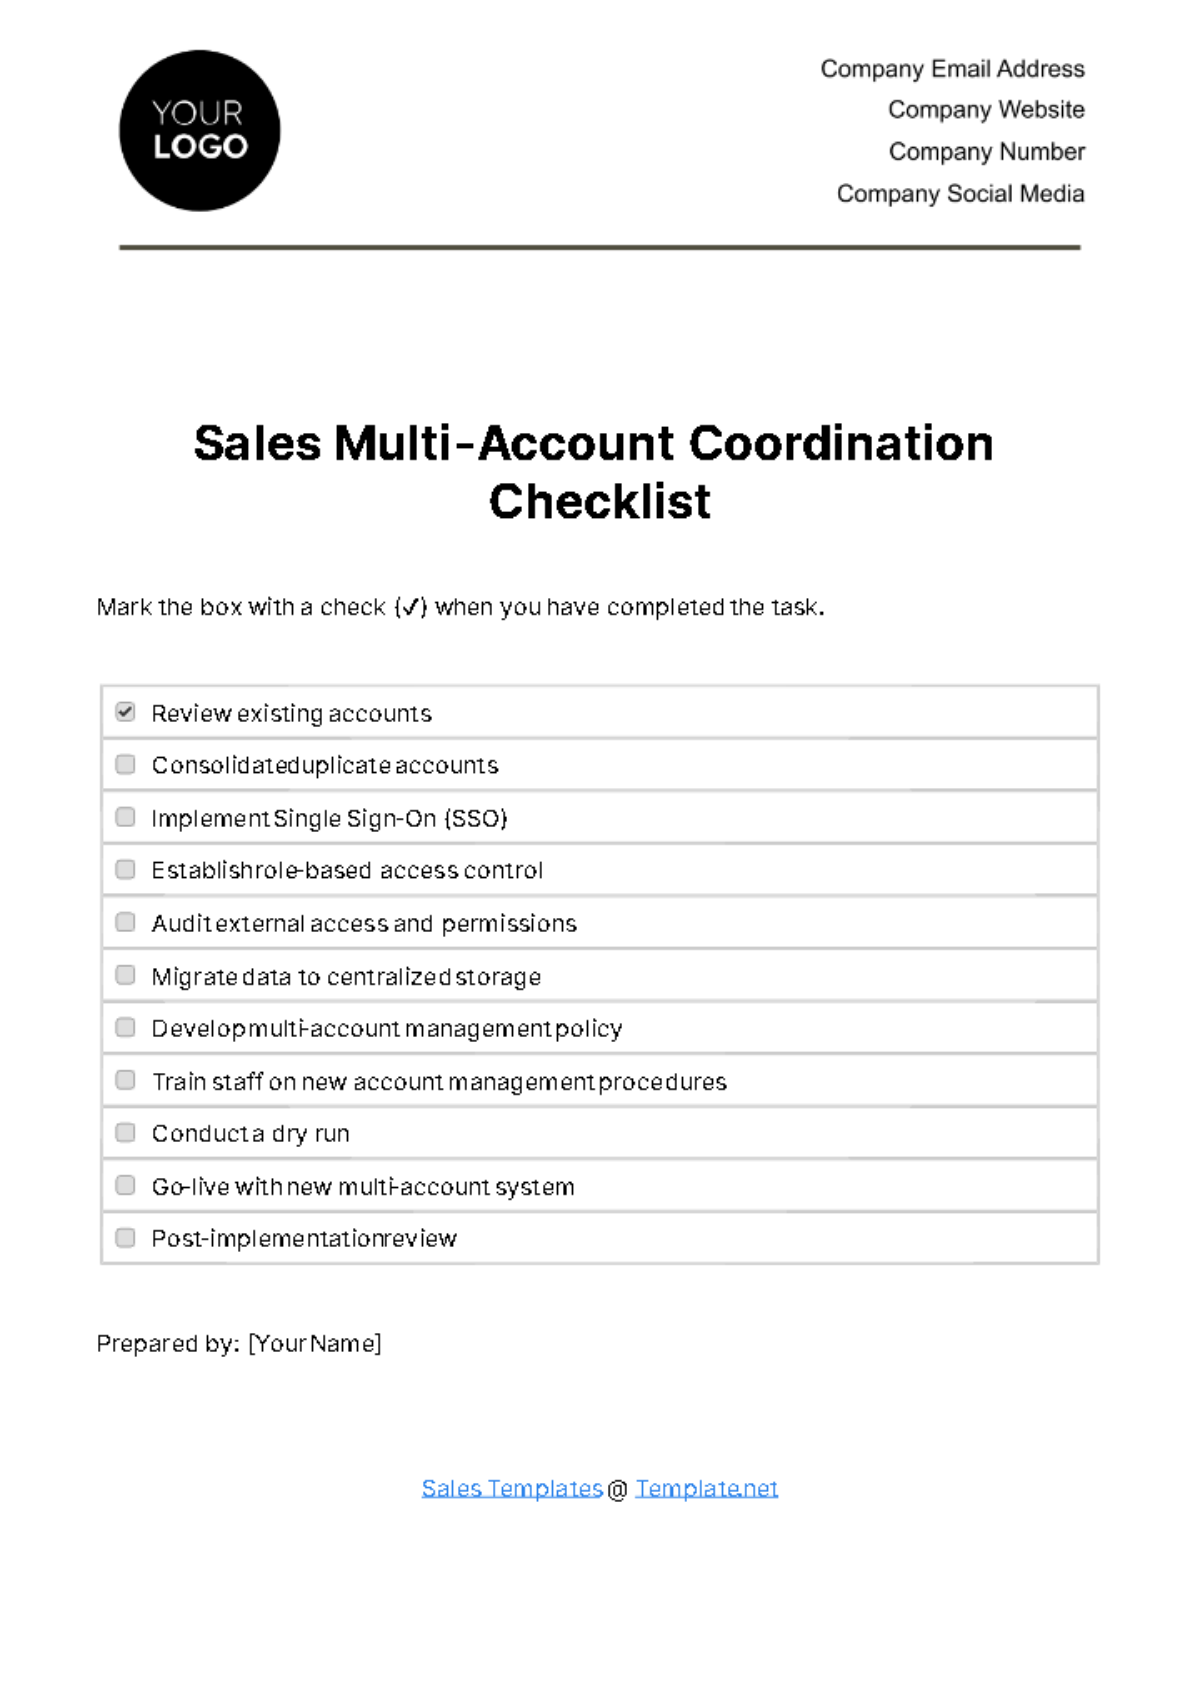 Sales Multi-Account Coordination Checklist Template